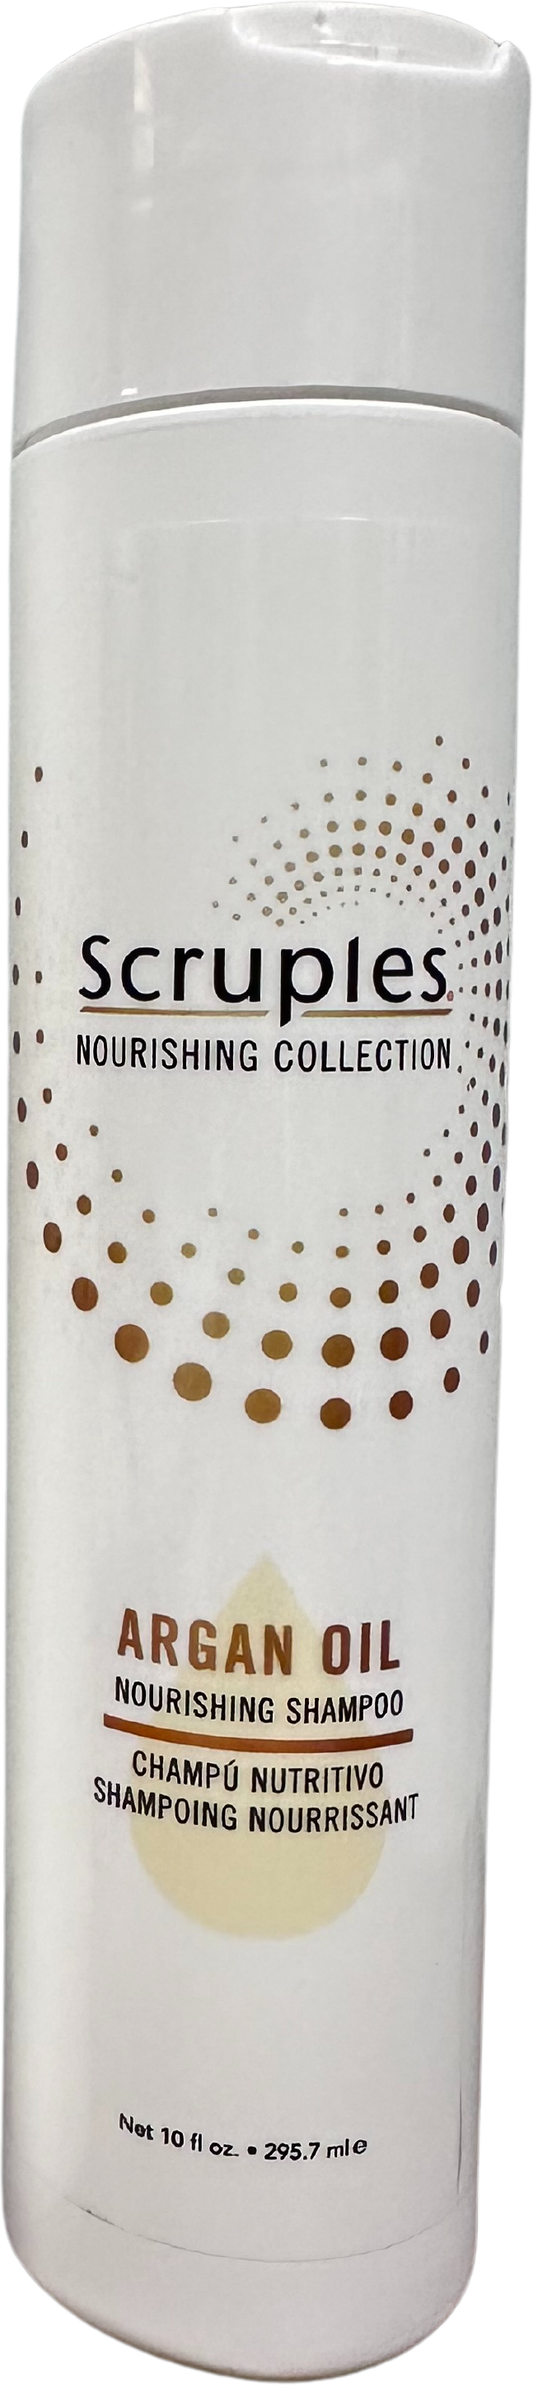 Scruples Nourishing Collection Argan Oil Shampoo 10oz